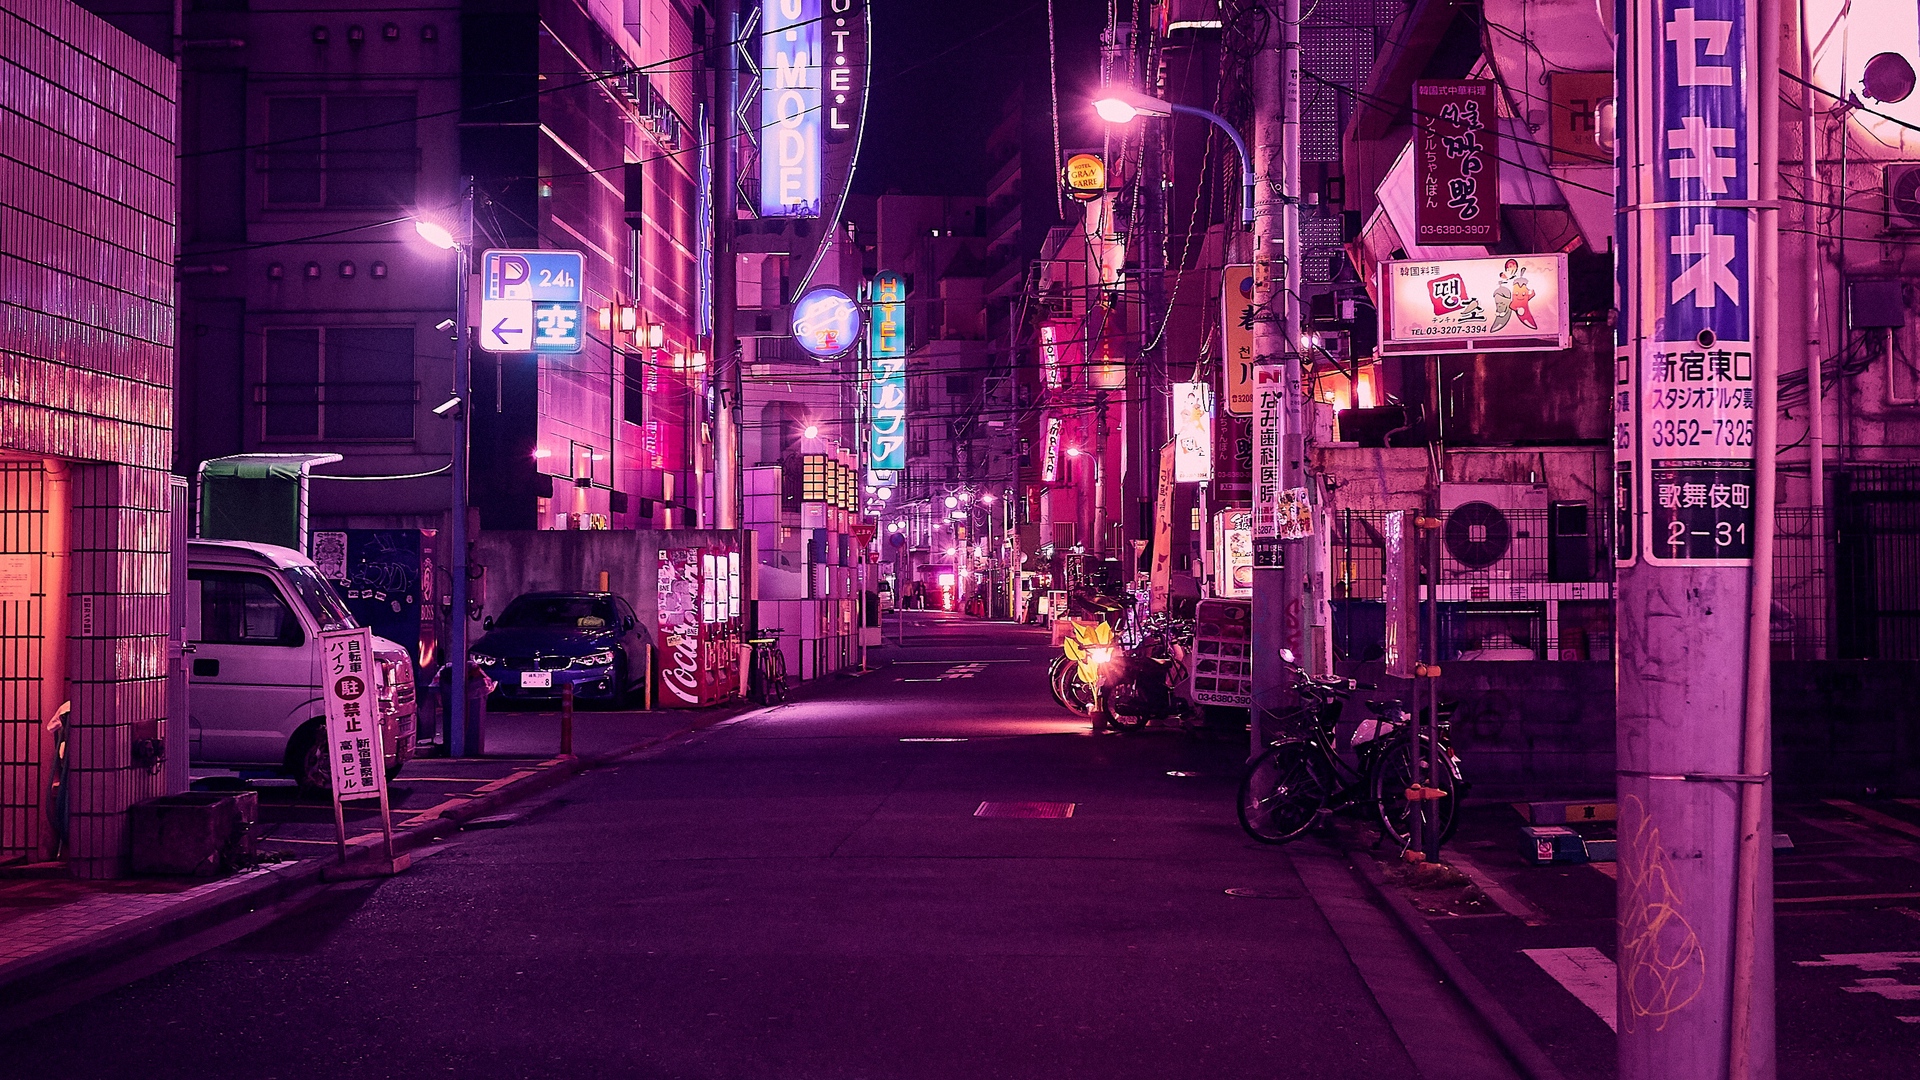 Download wallpaper 1920x1080 street, neon, night city, backlight, purple, tokyo full hd, hdtv, fhd, 1080p HD background